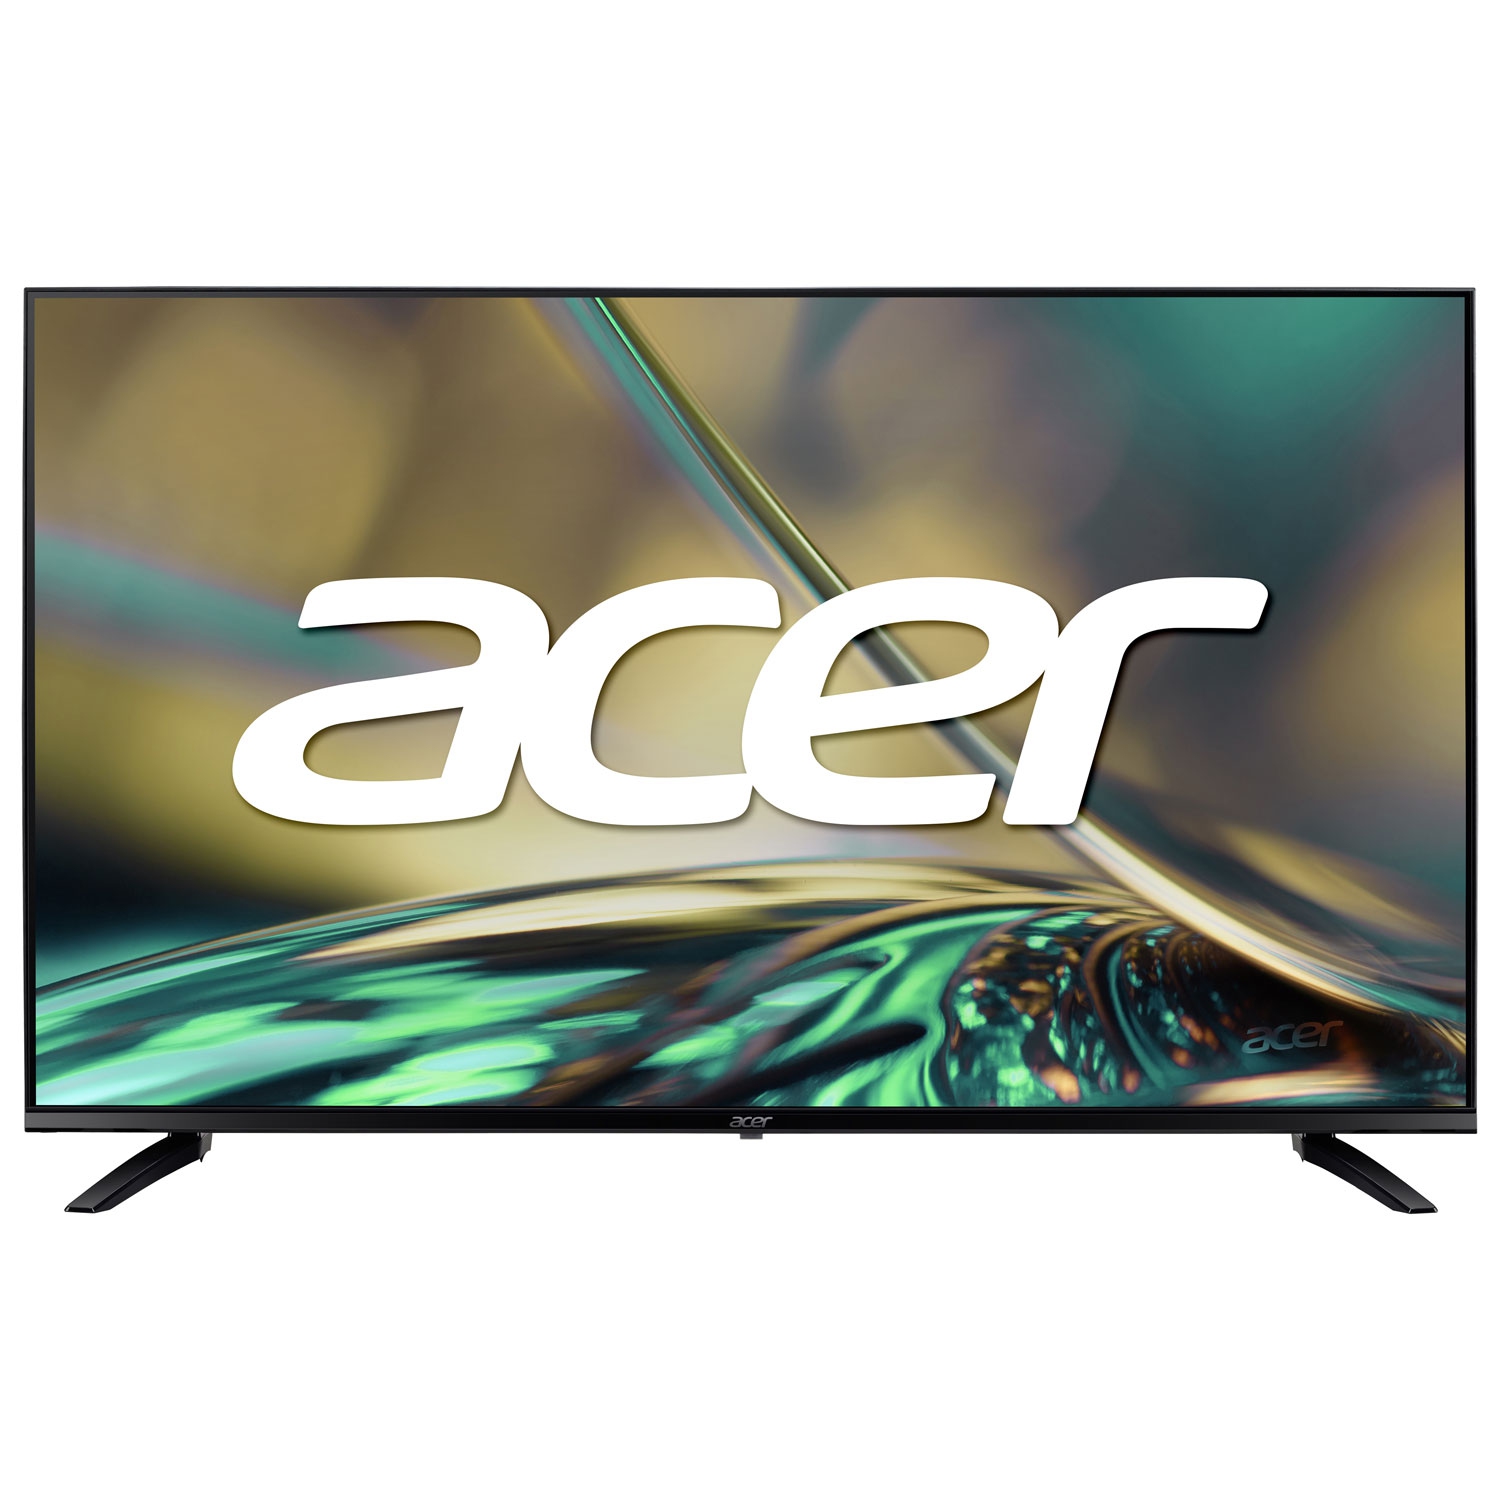 Acer 43" Full HD IPS Smart Monitor - Manufacturer ReCertified w/ 1 Year Warranty